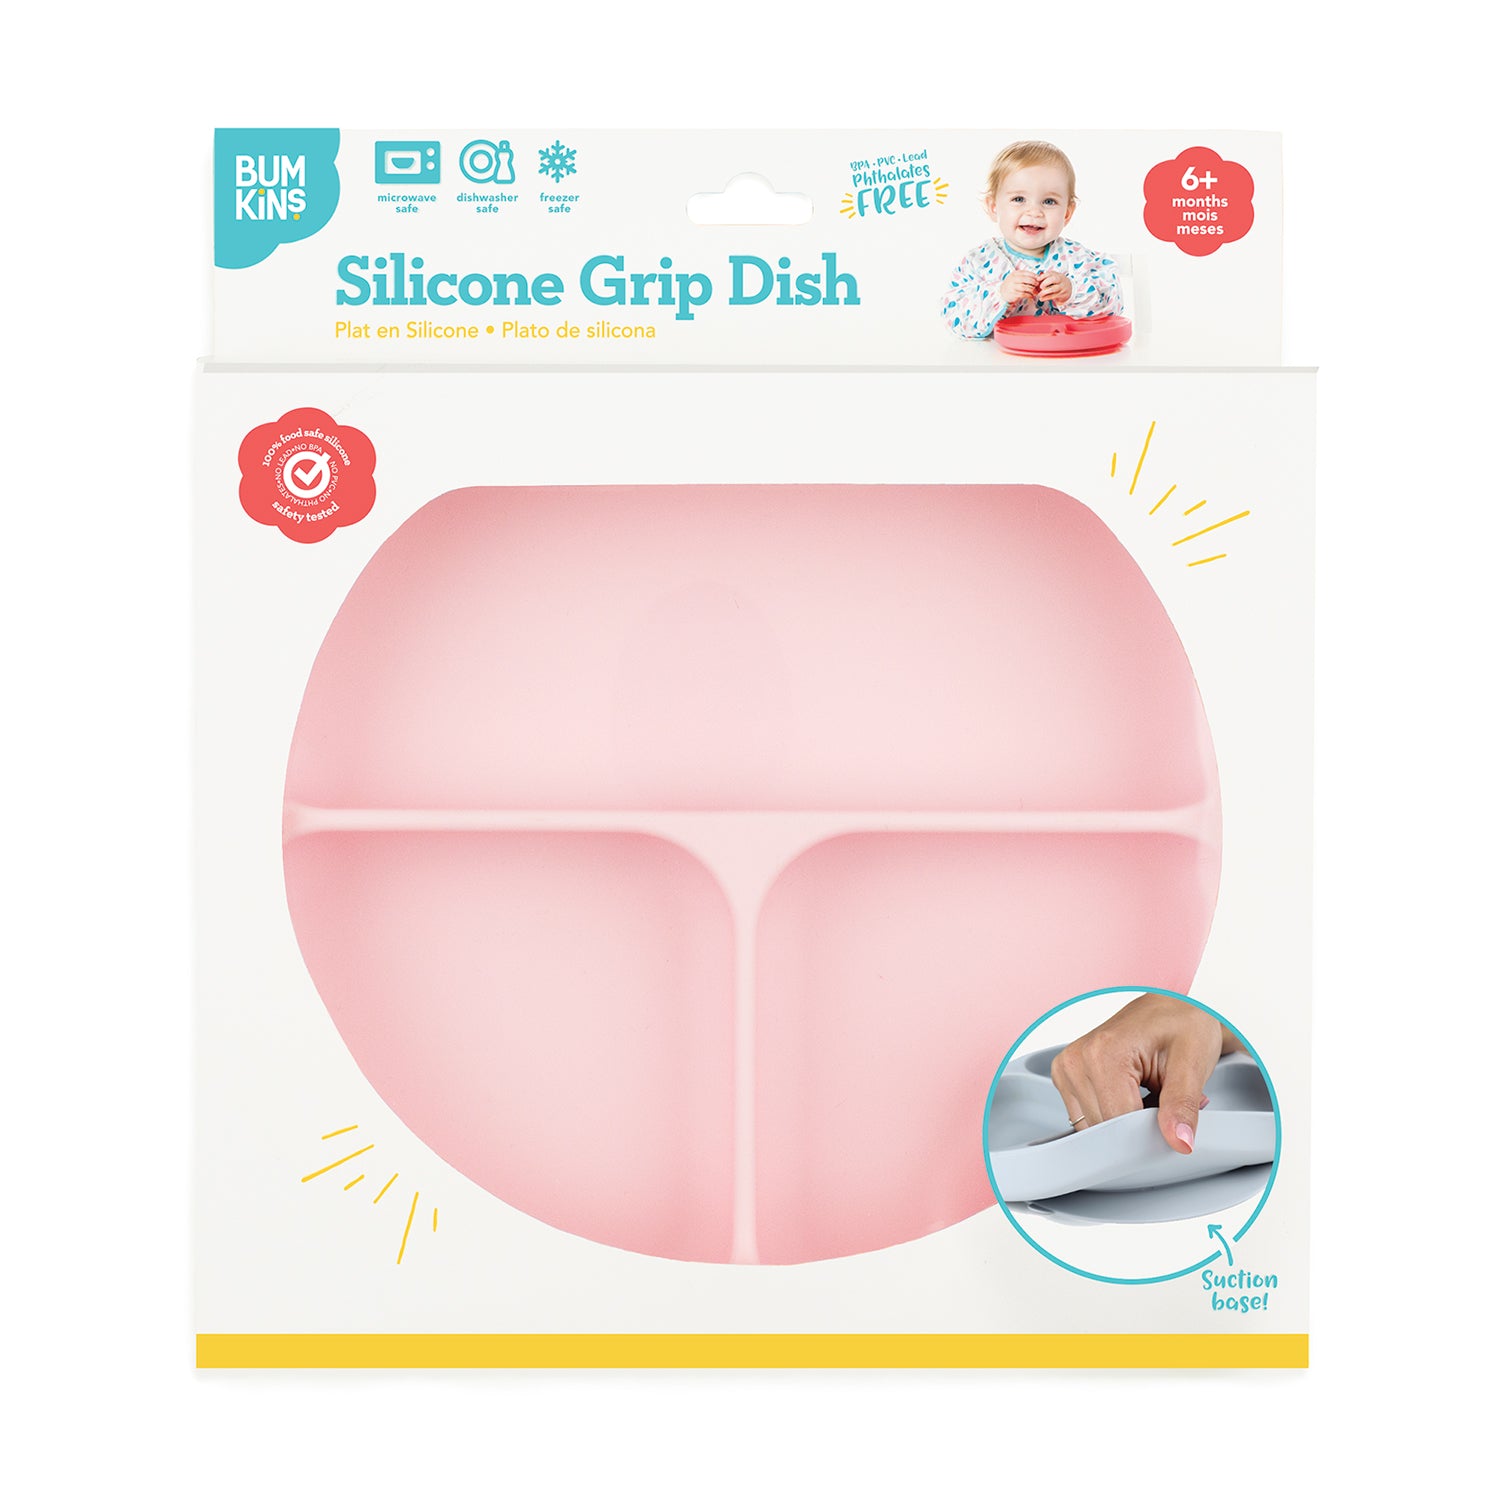 Silicone Grip Dish